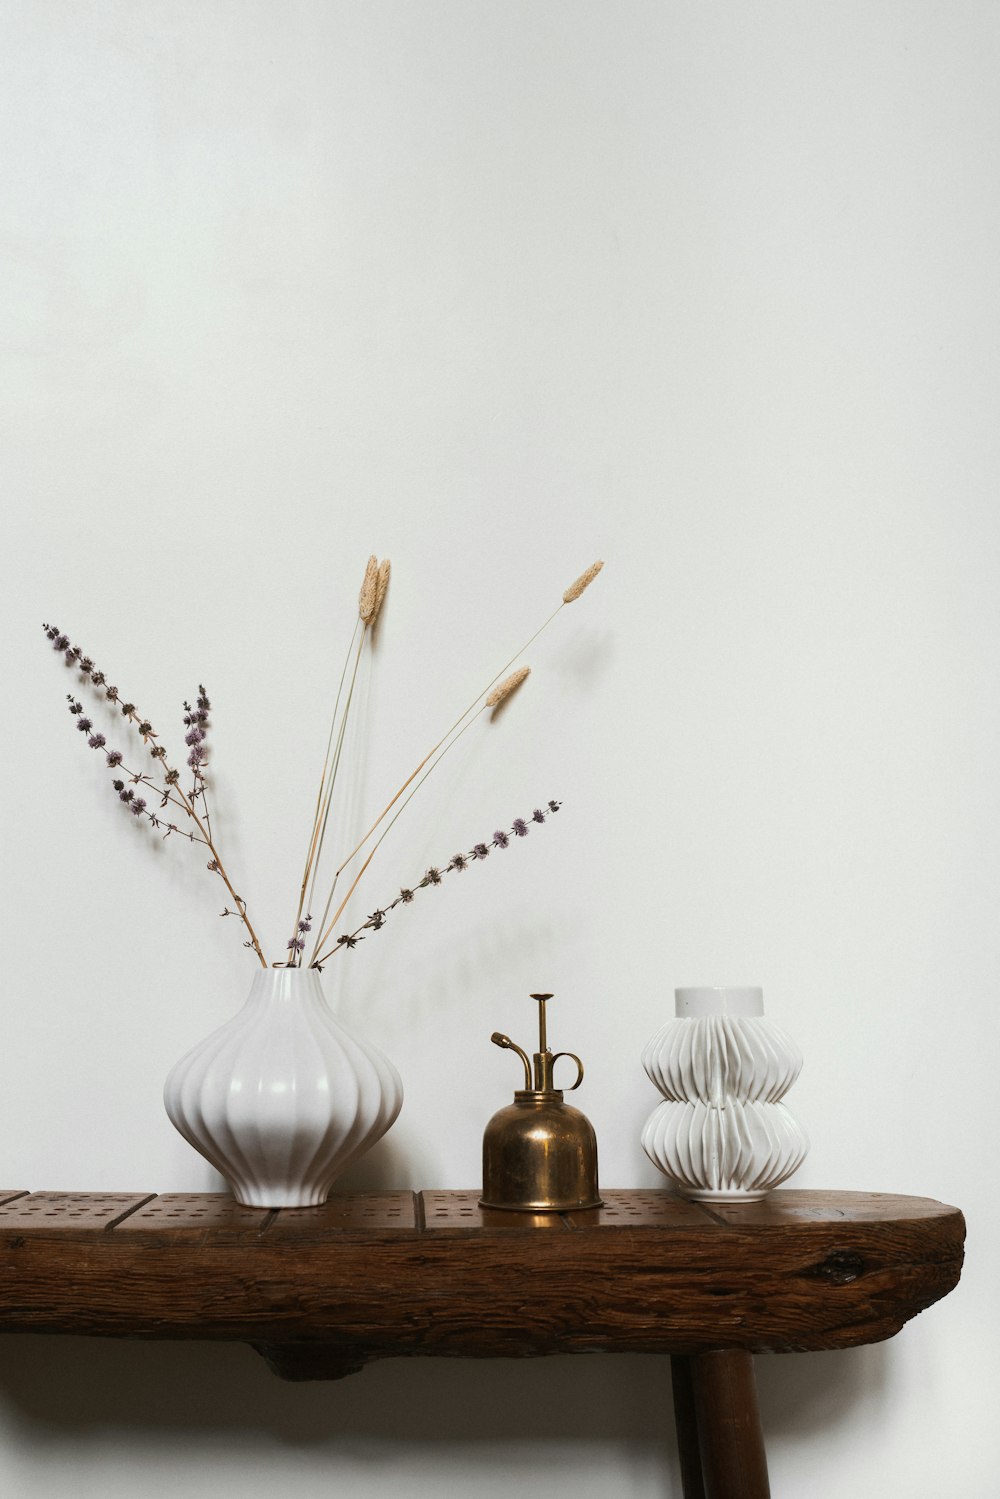 white ceramic vase with brown wooden sticks